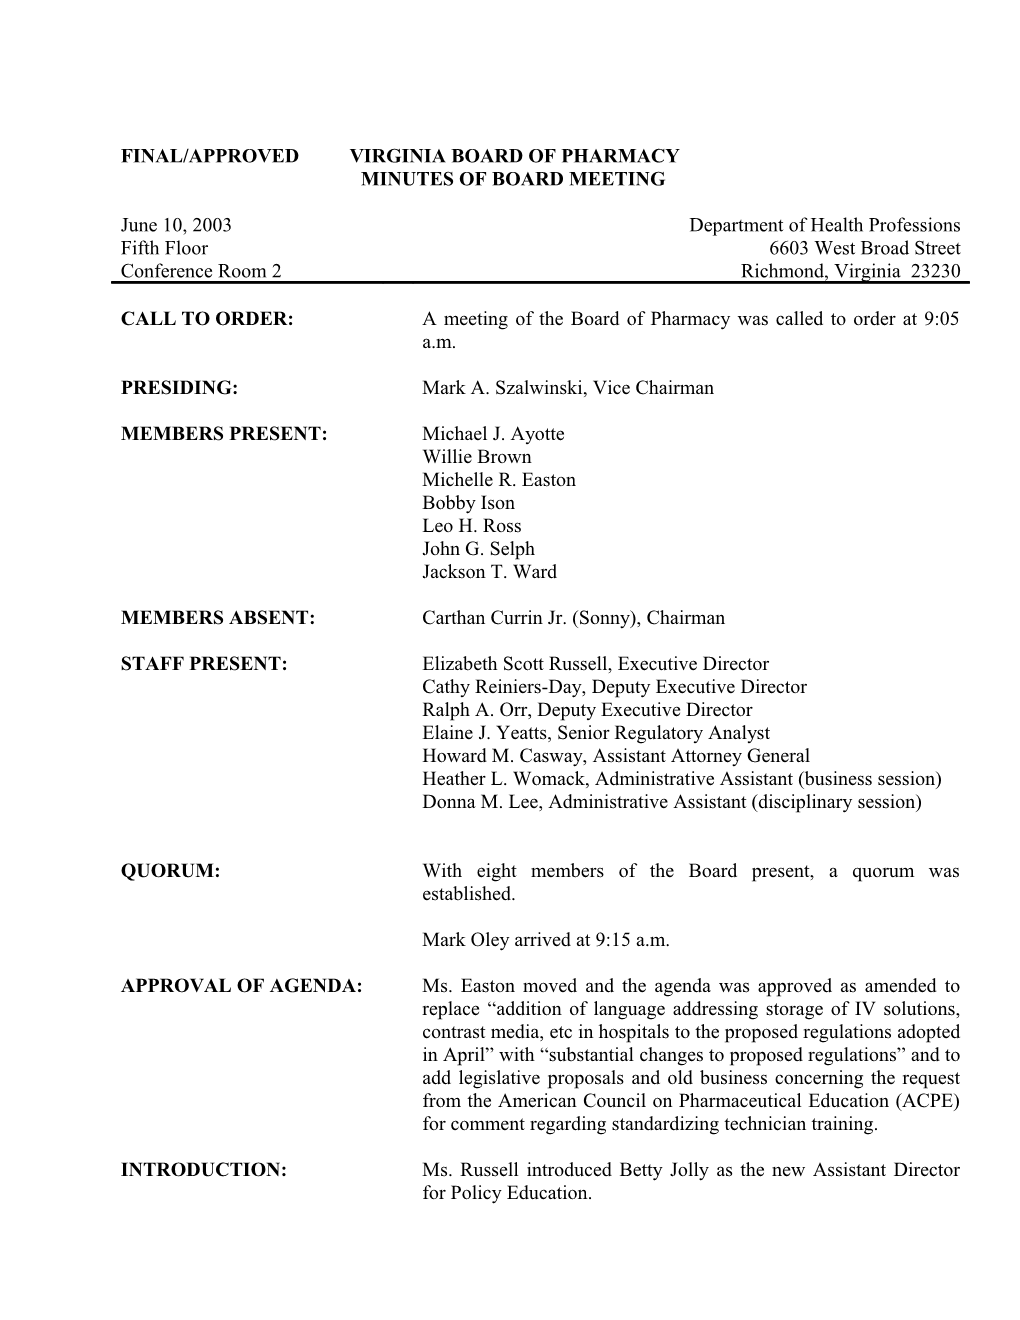 Virginia Board of Pharmacy Minutes 06-10-2003